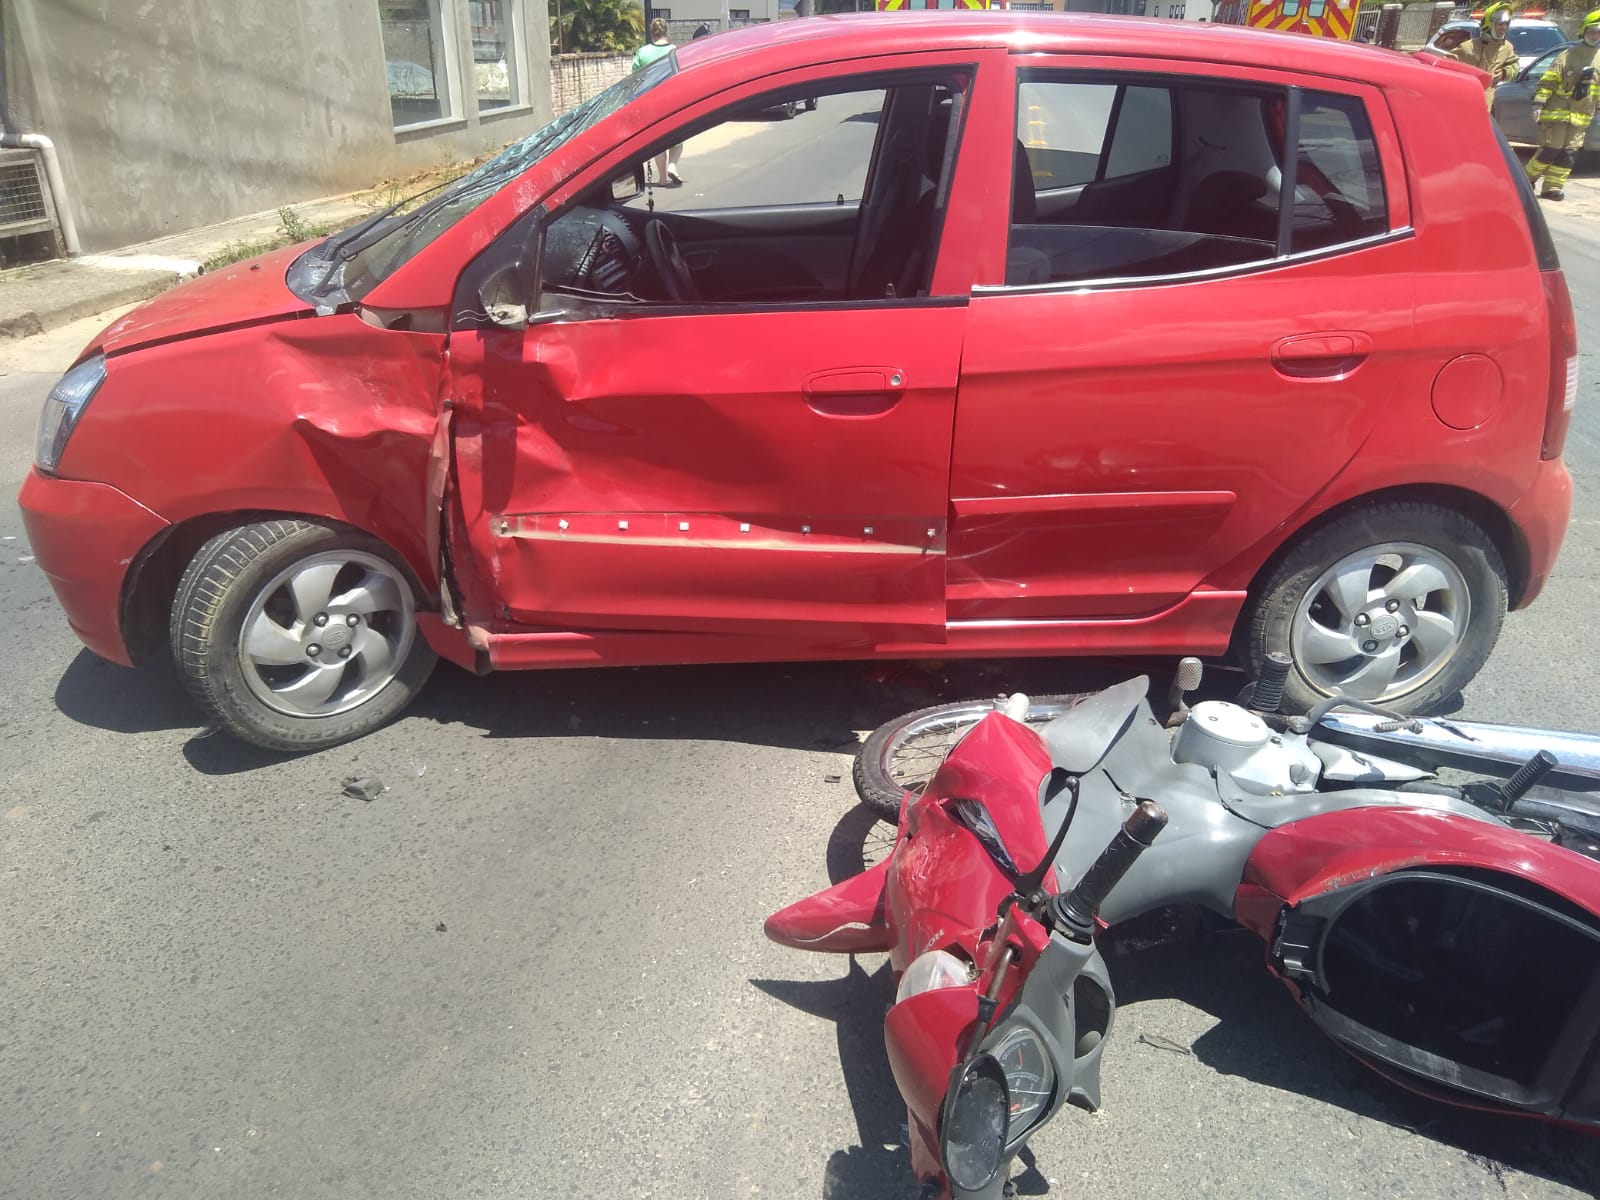 Acidente deixa motociclista ferido no Centro de Ibirama